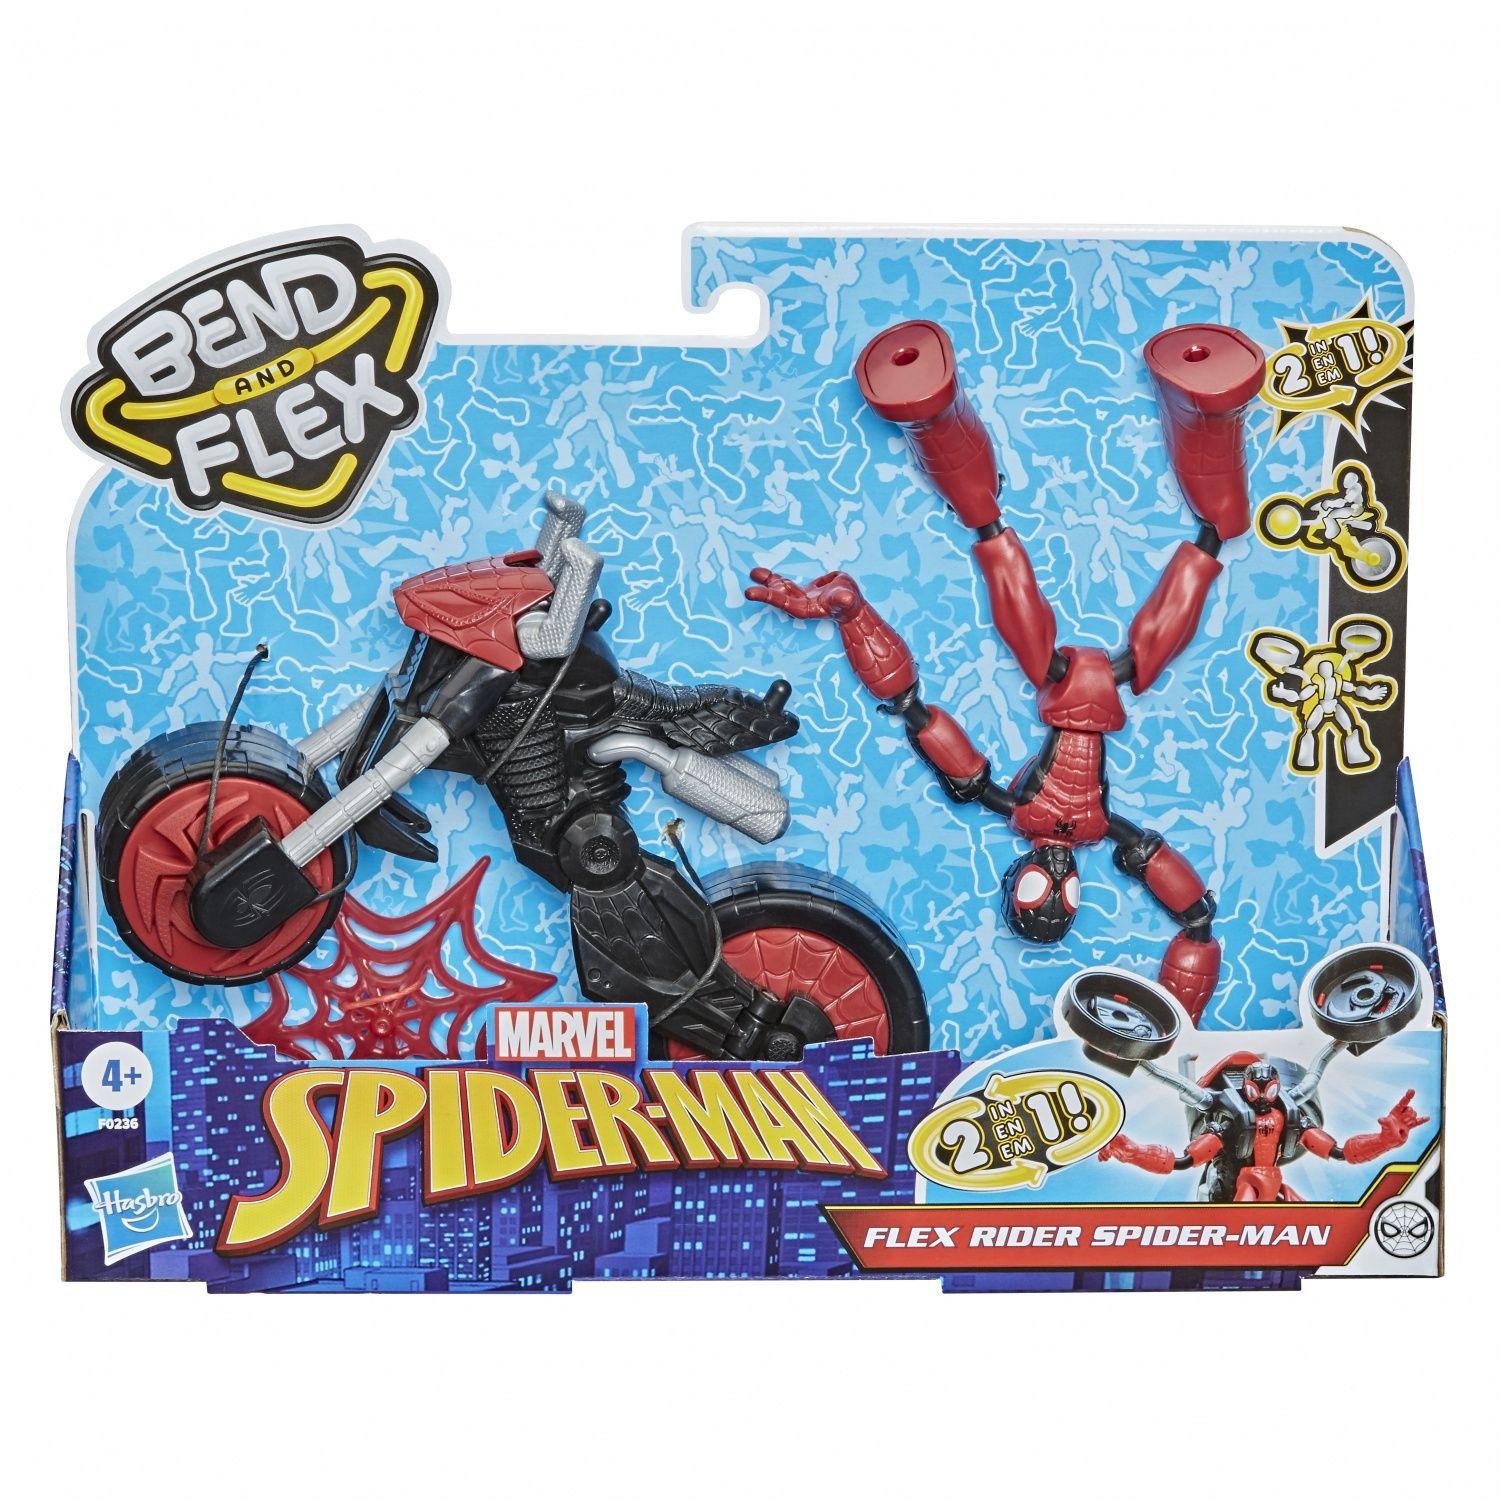 Figurine Spiderman 15cm - modèle aléatoire SPIDERMAN : la figurine à Prix  Carrefour